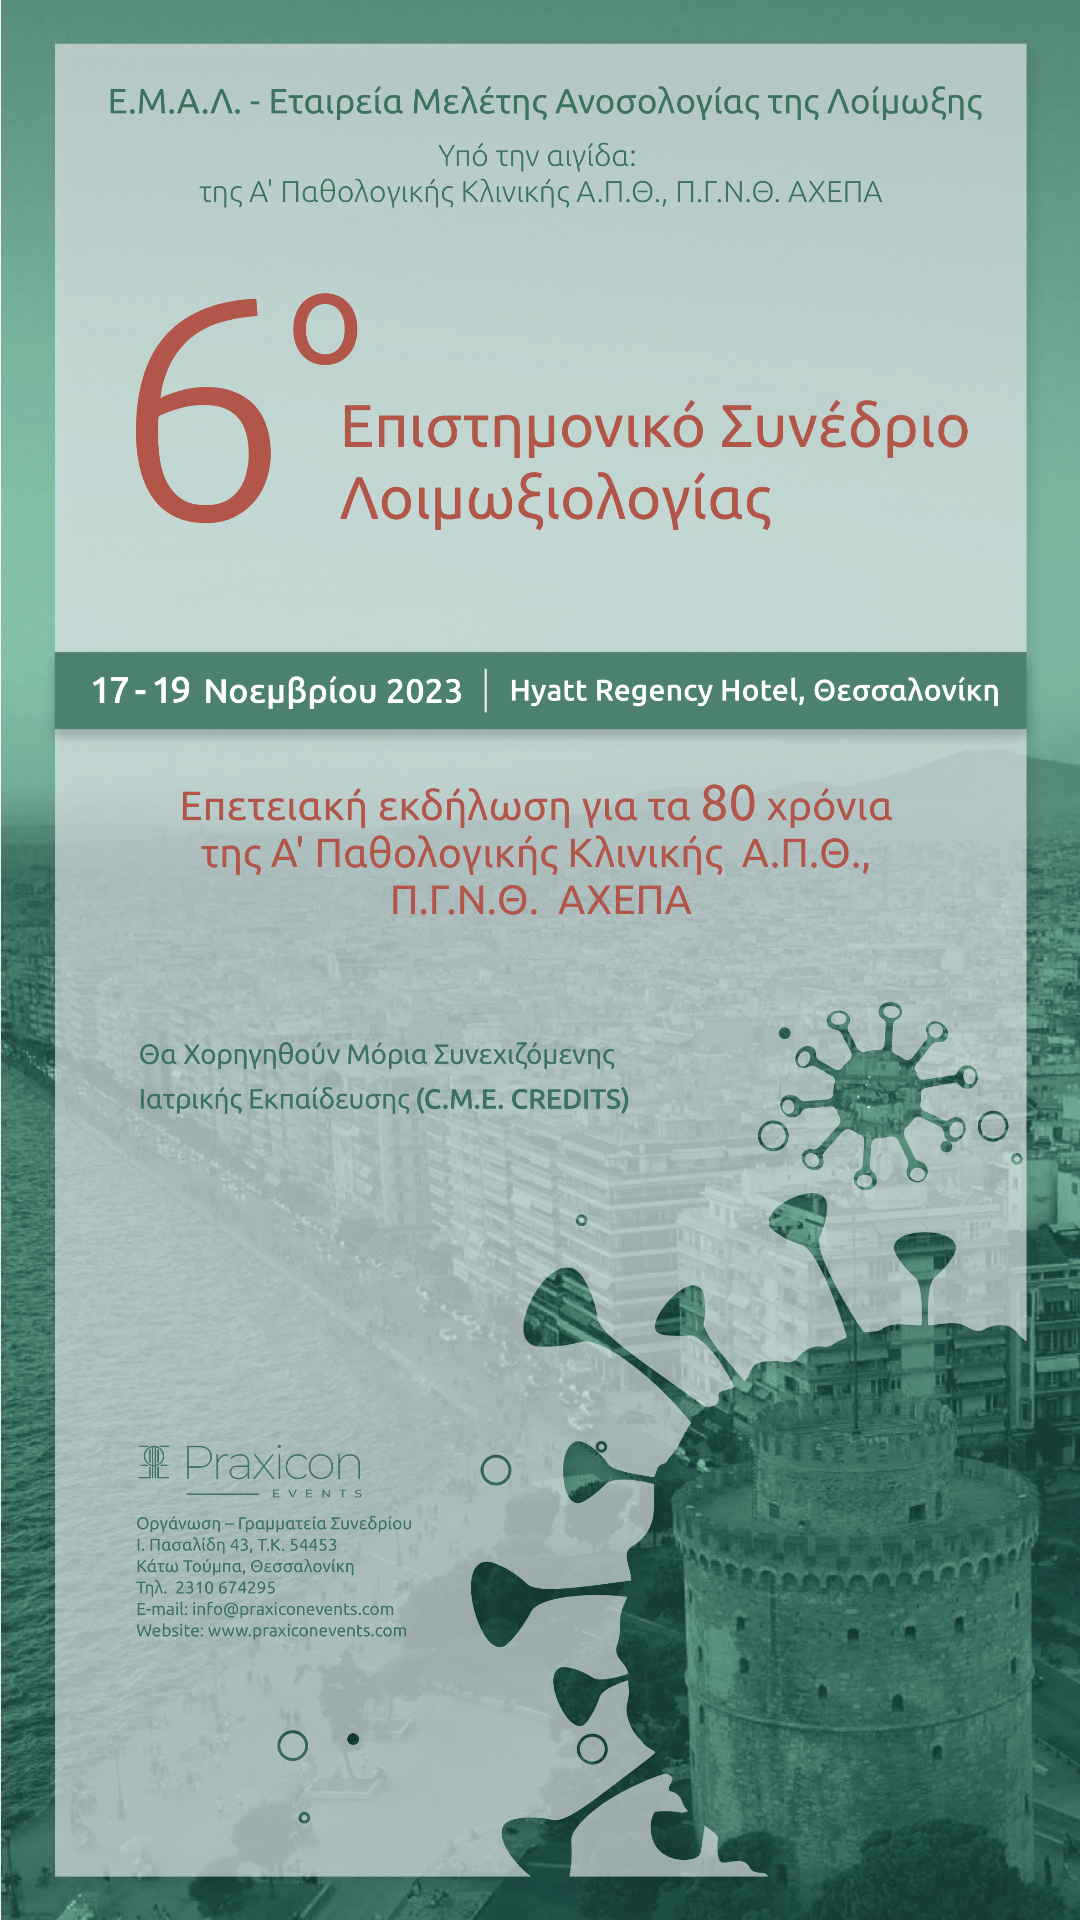 SAVE THE DATE - 6ο Πανελλήνιο Συνέδριο Λοιμωξιολογίας, 17-19 Νοεμβρίου 2023, Θεσσαλονίκη